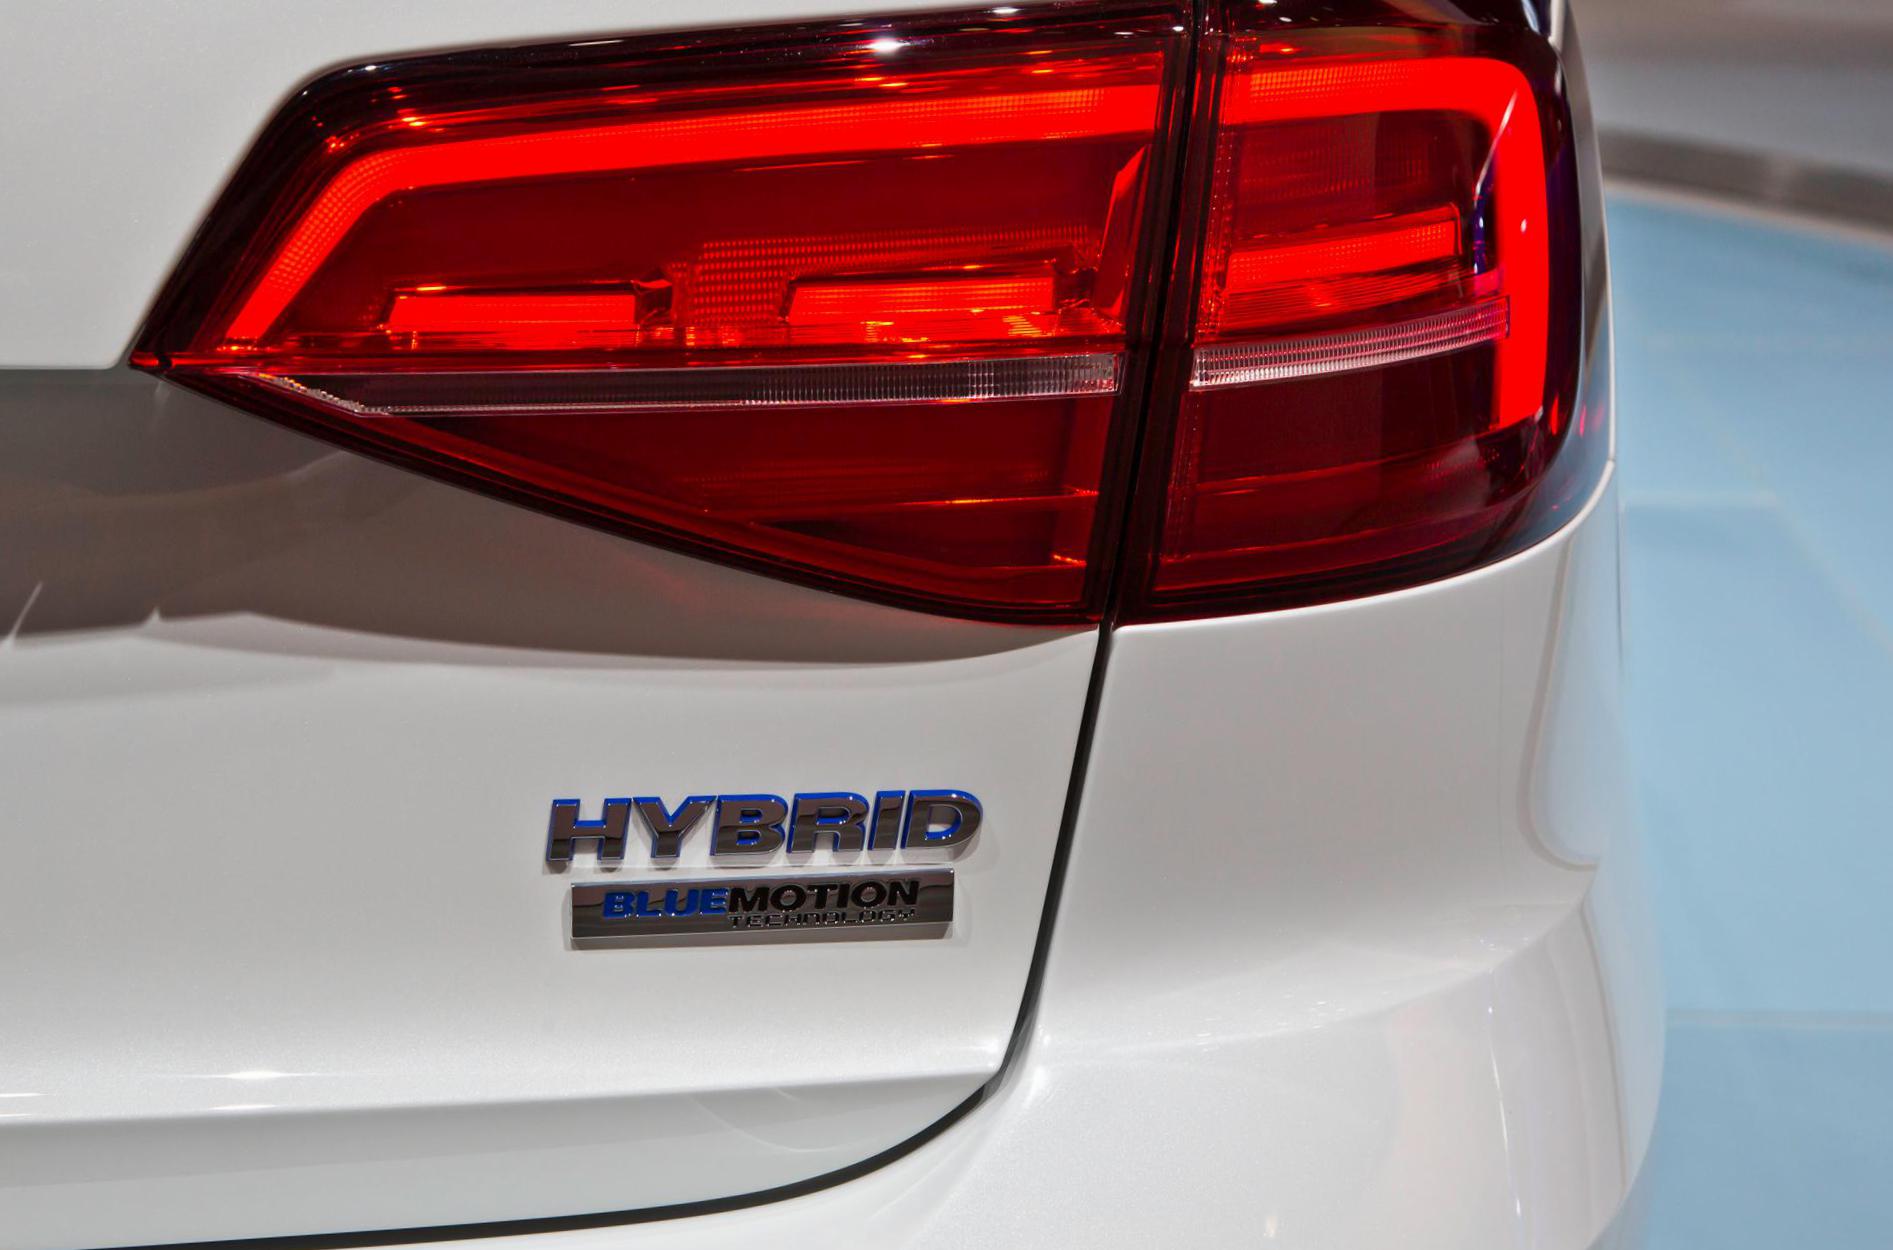 Jetta Hybrid Volkswagen approved 2008